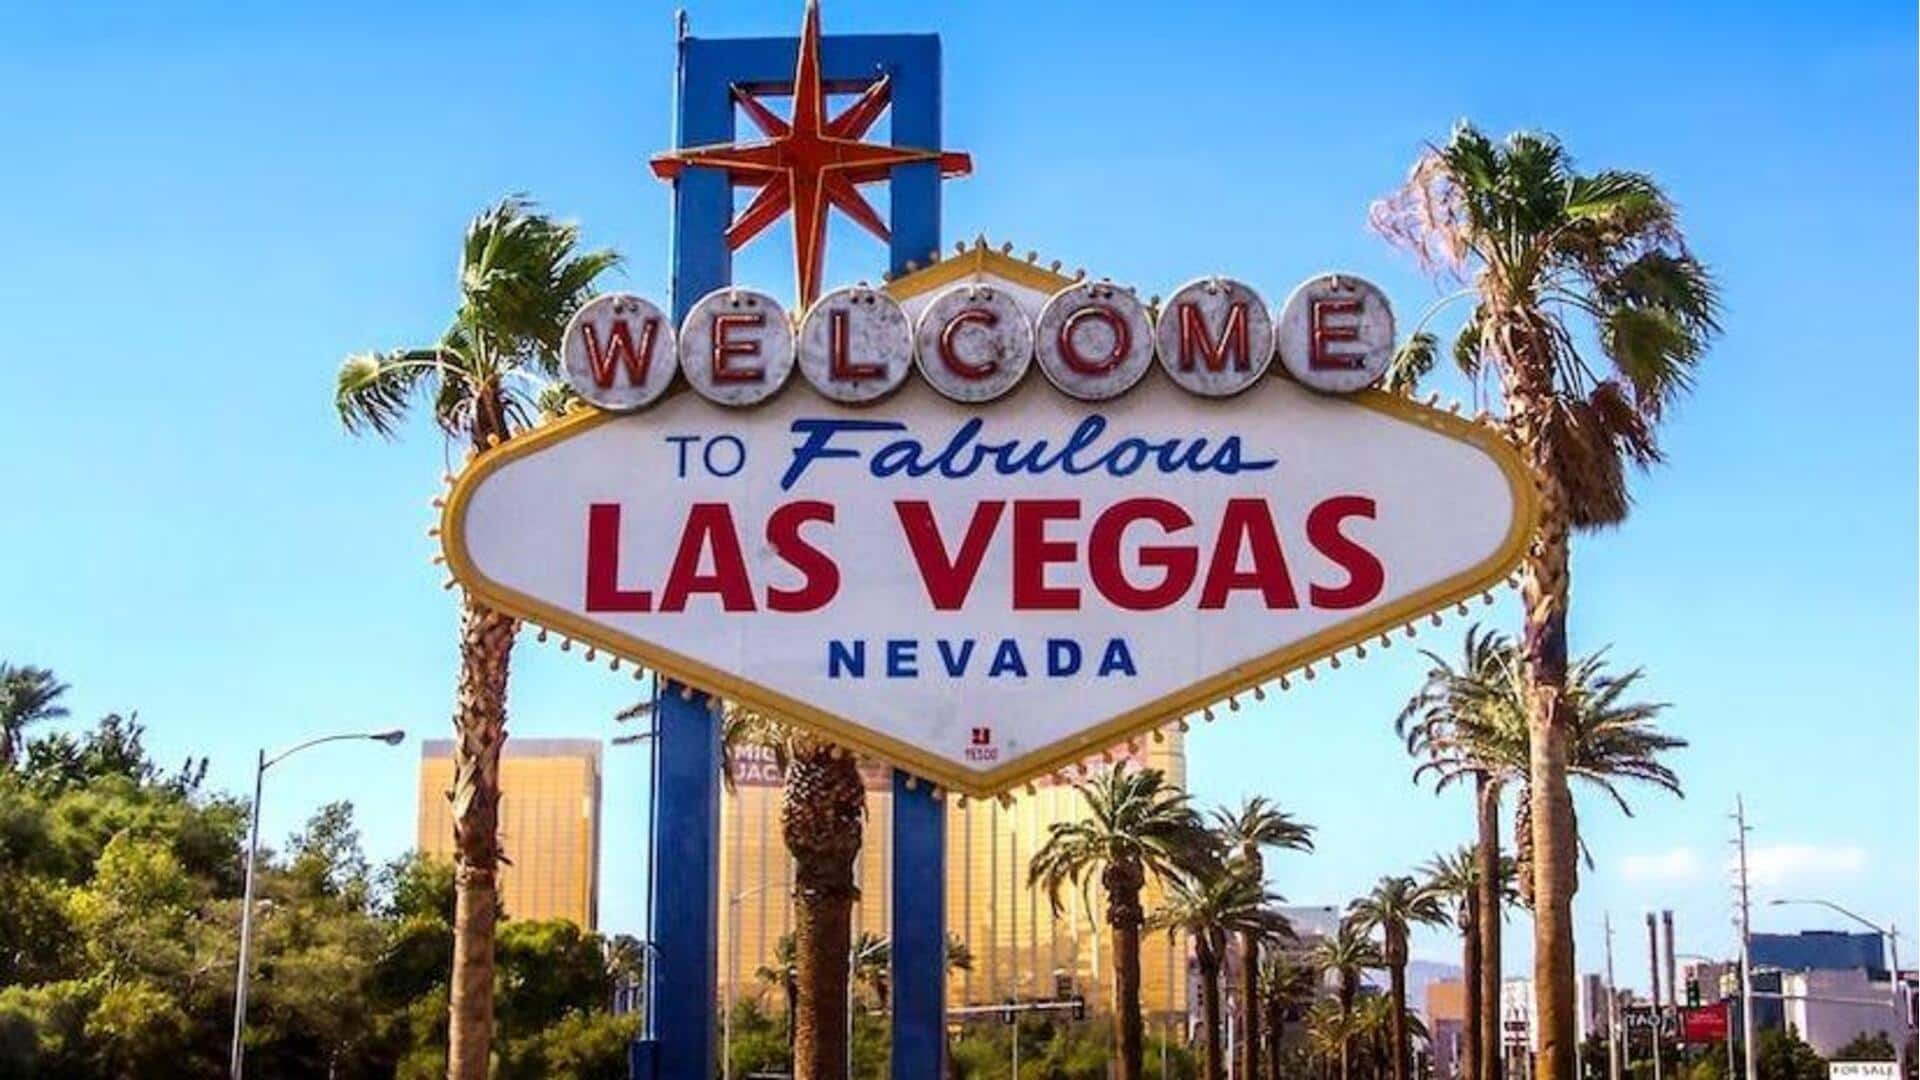 Las Vegas yang lebih dari sekadar kasino: Aktivitas unik yang wajib dicoba